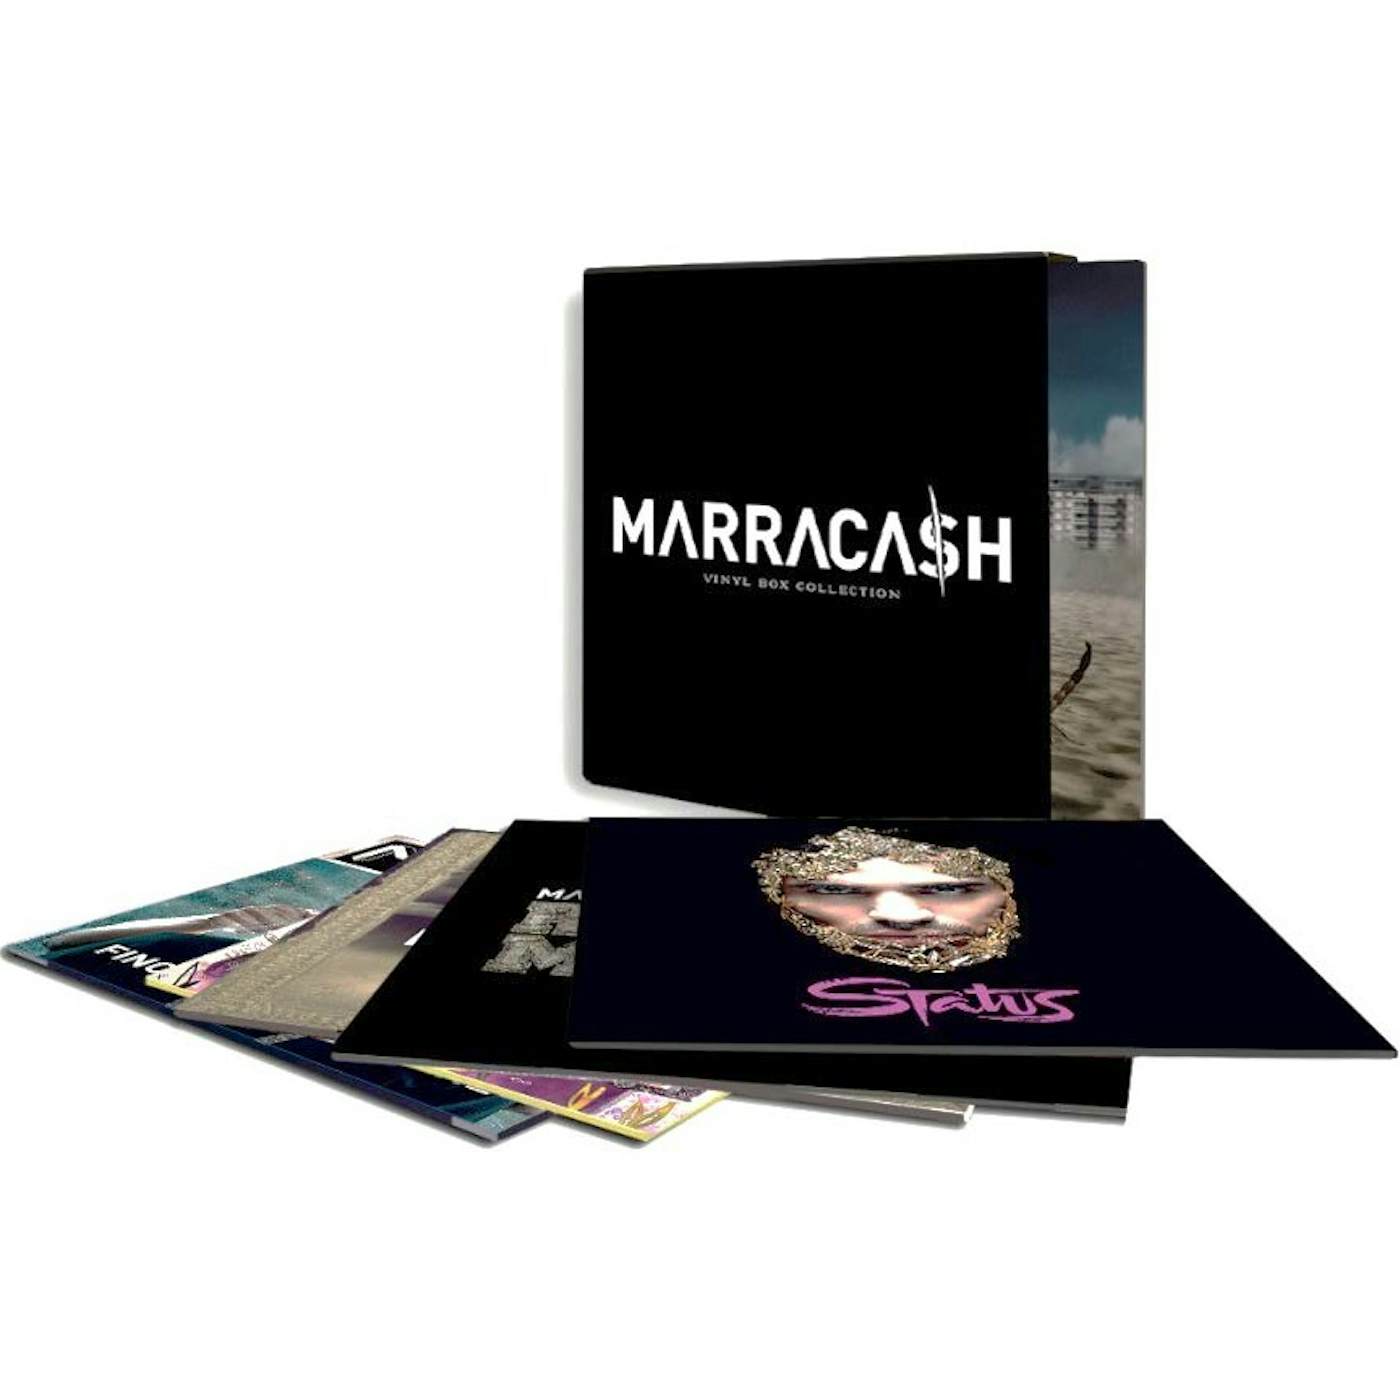 Marracash VINYL BOX COLLECTION Vinyl Record